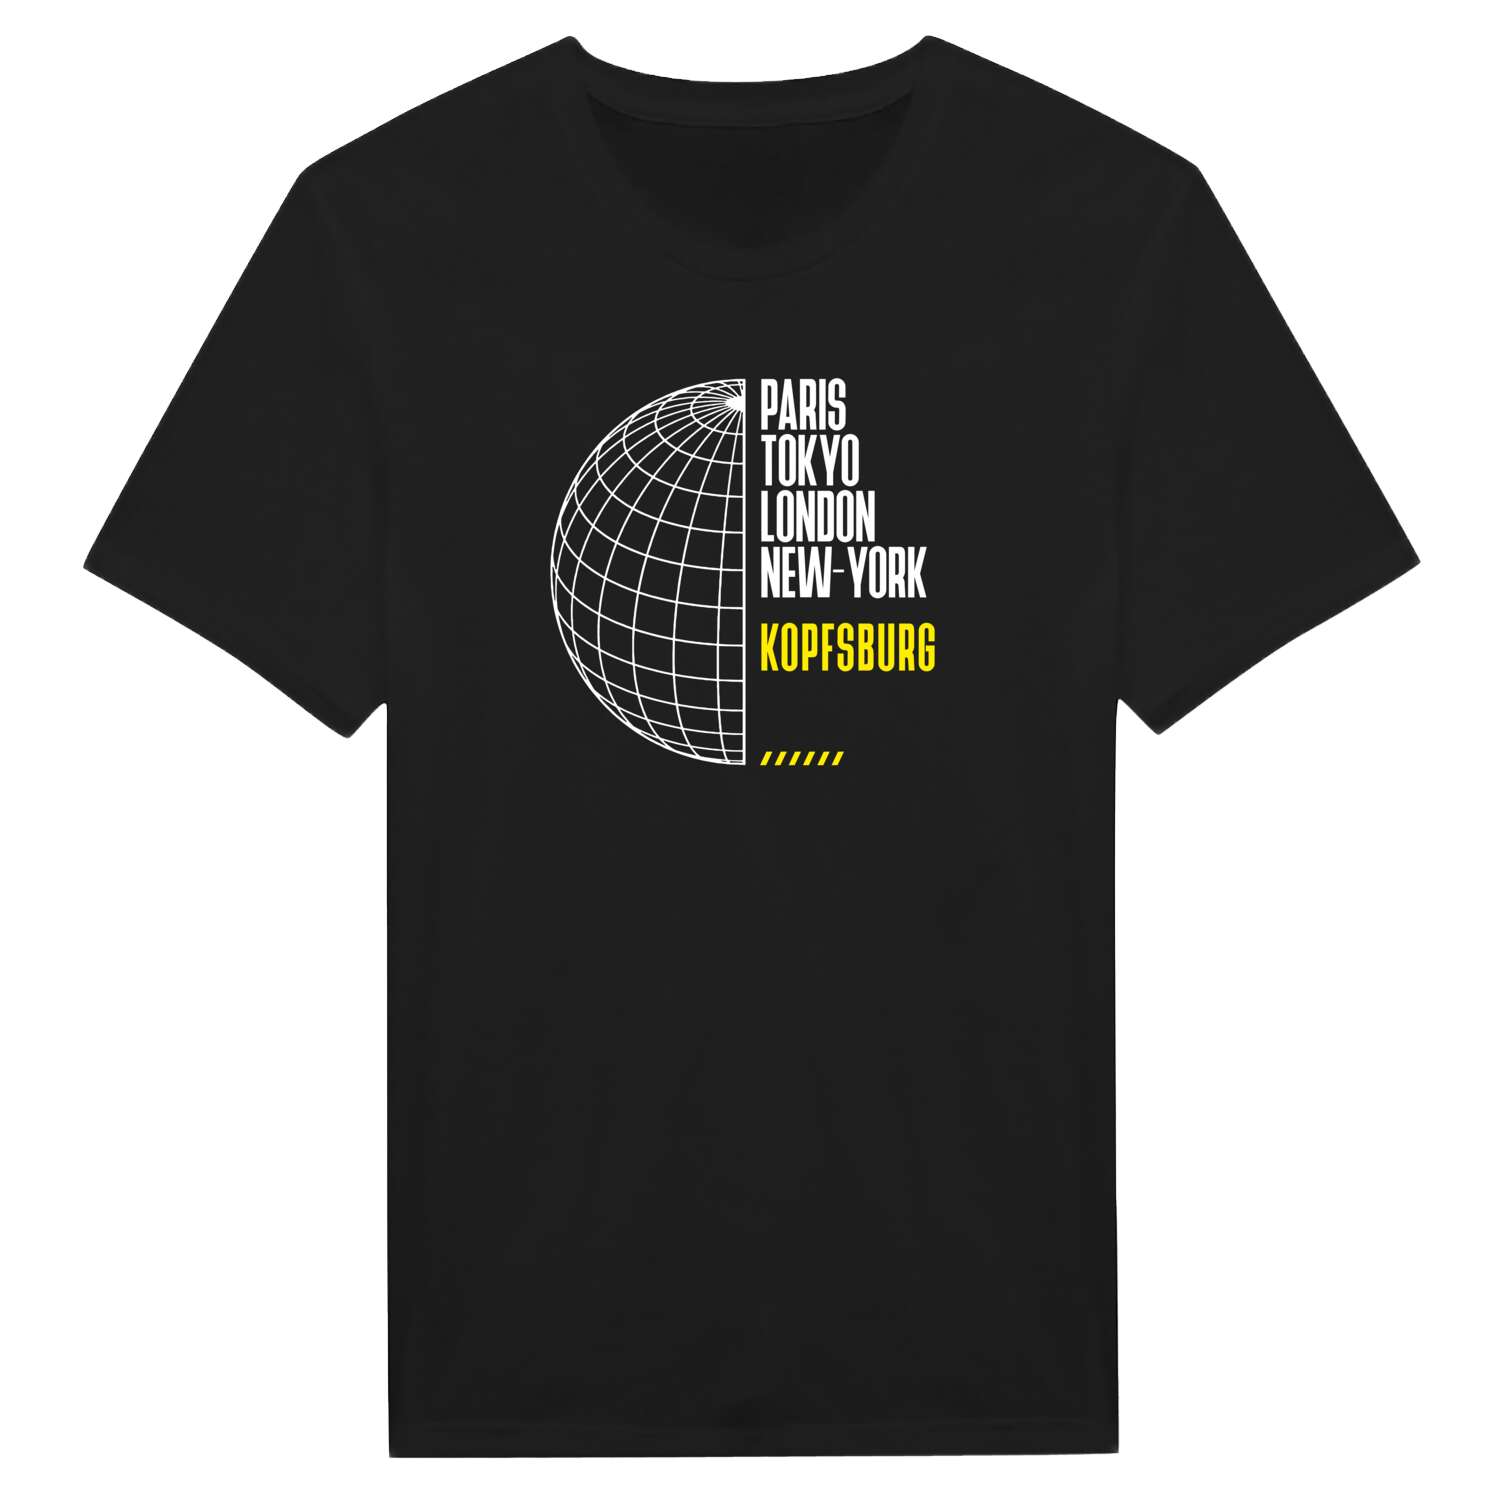 Kopfsburg T-Shirt »Paris Tokyo London«